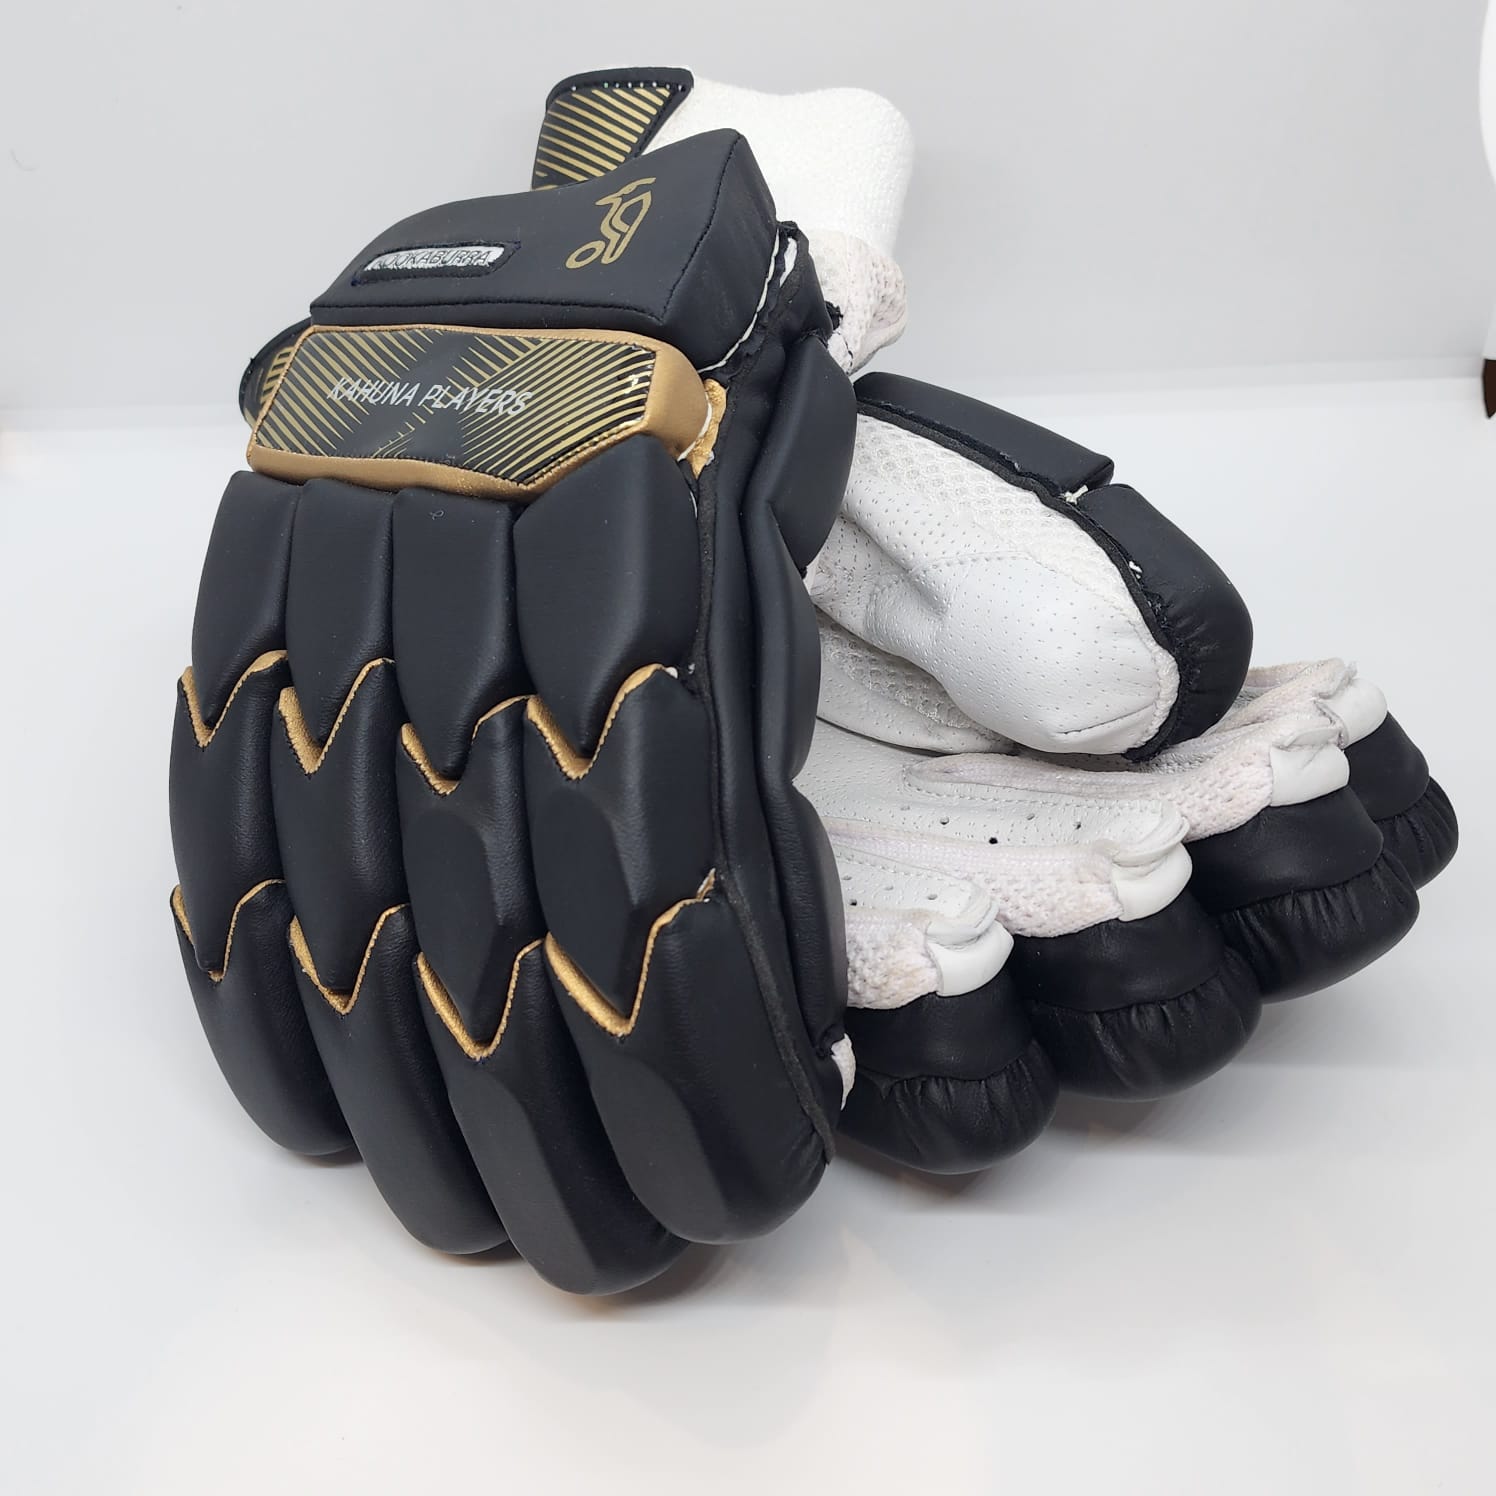 Kookaburra Kahuna Players Cricket Batting Gloves, Men Size Golden Black - For Right Hand Players